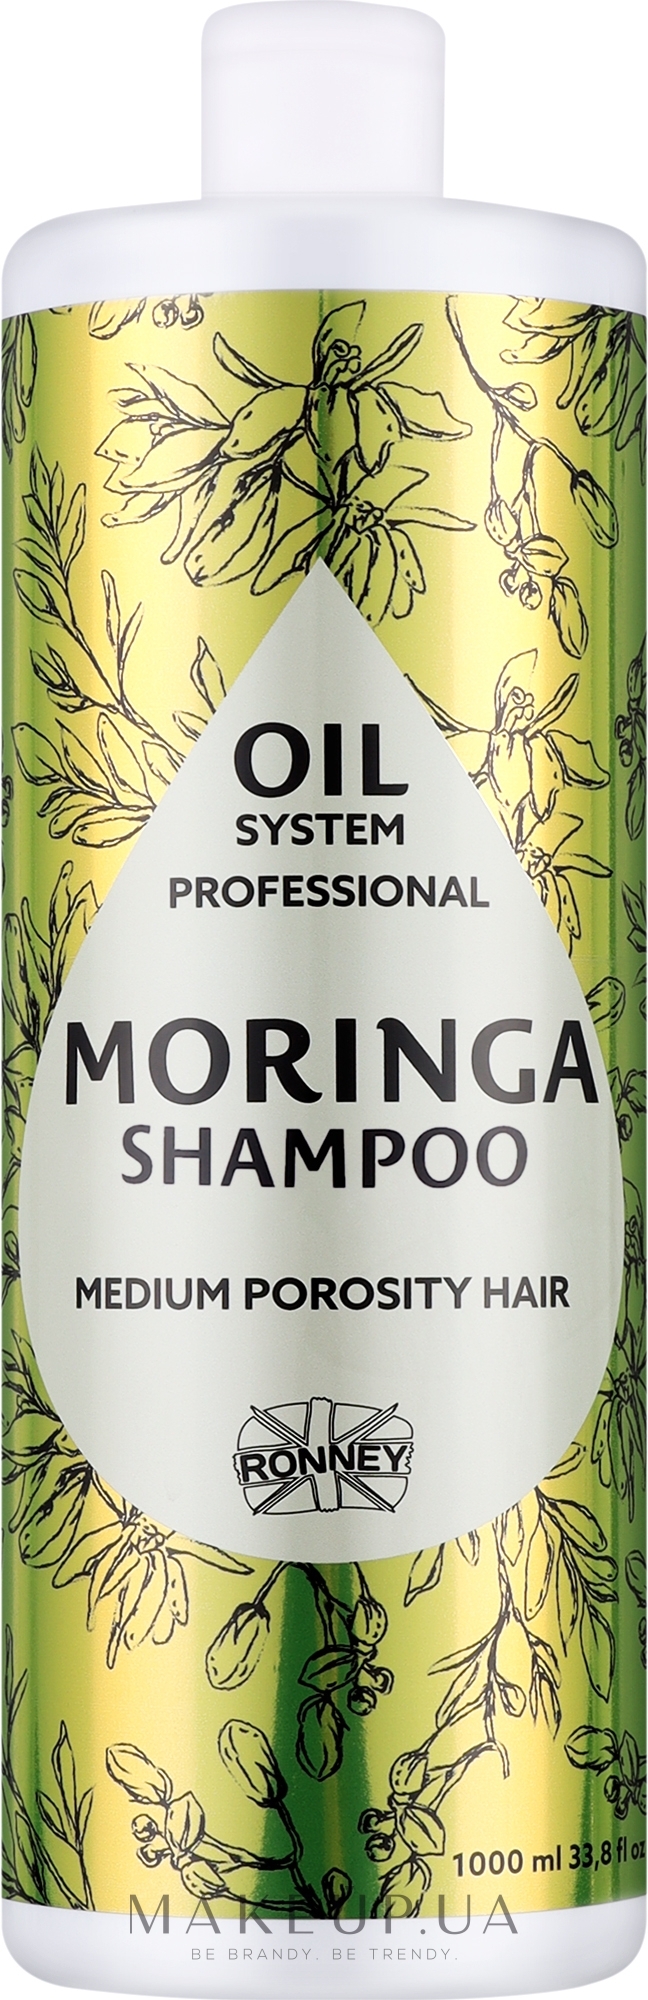 Шампунь для середньопористого волосся - Ronney Professional Oil System Medium Porosity Hair Moringa Shampoo — фото 1000ml